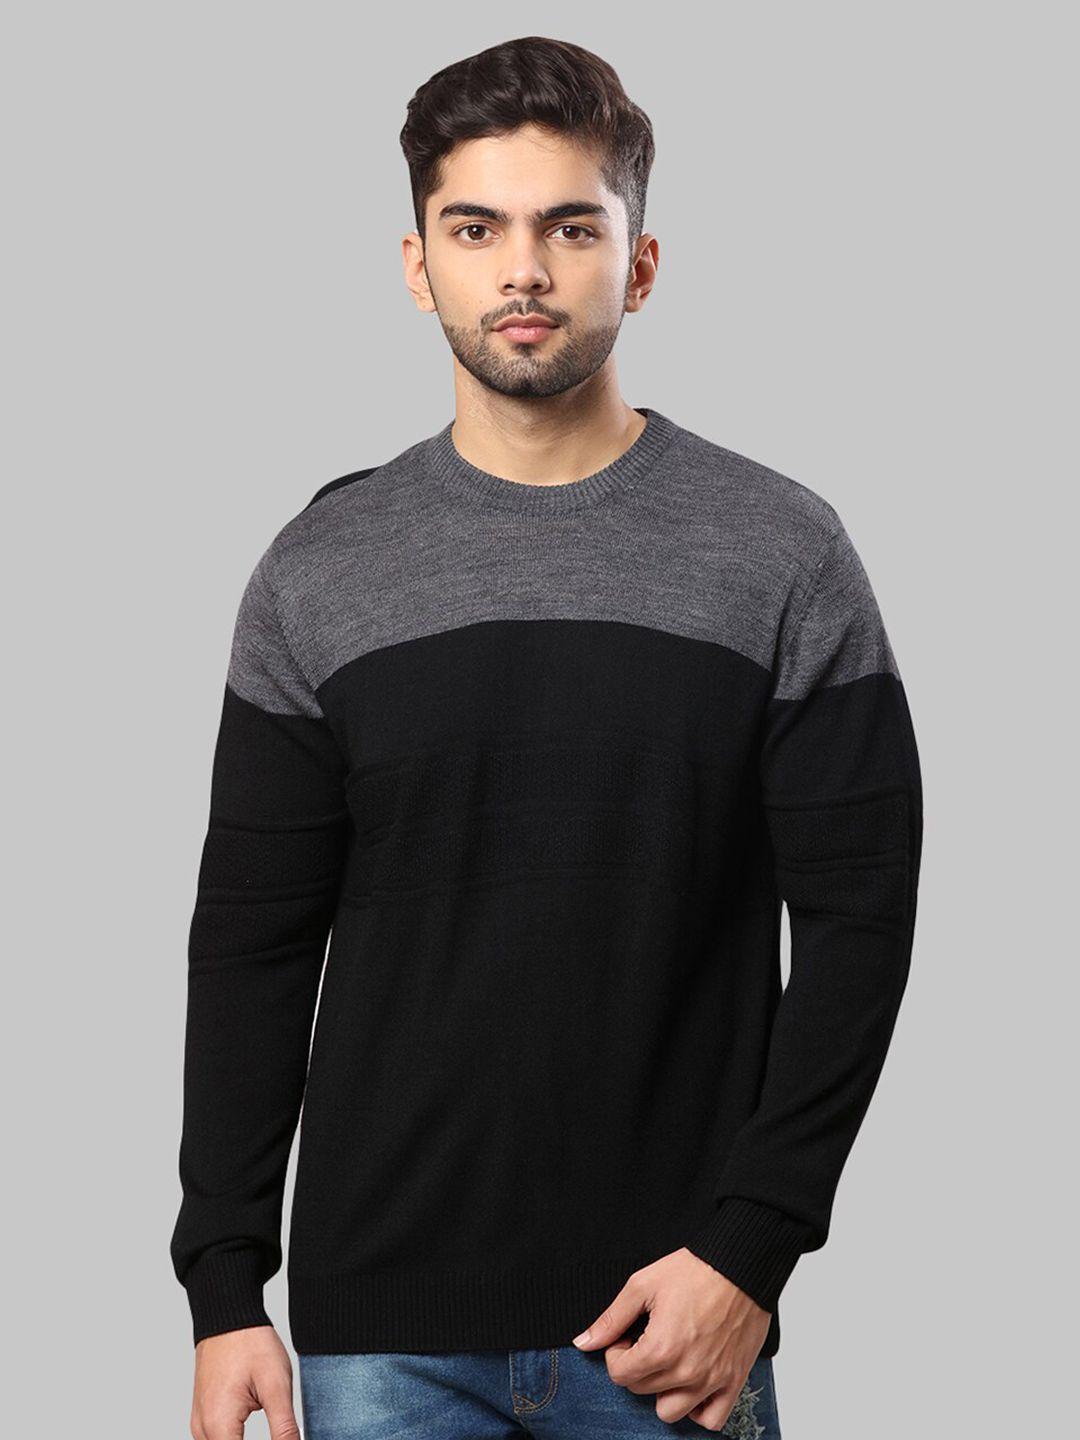 raymond-men-black-&-grey-colourblocked-pullover